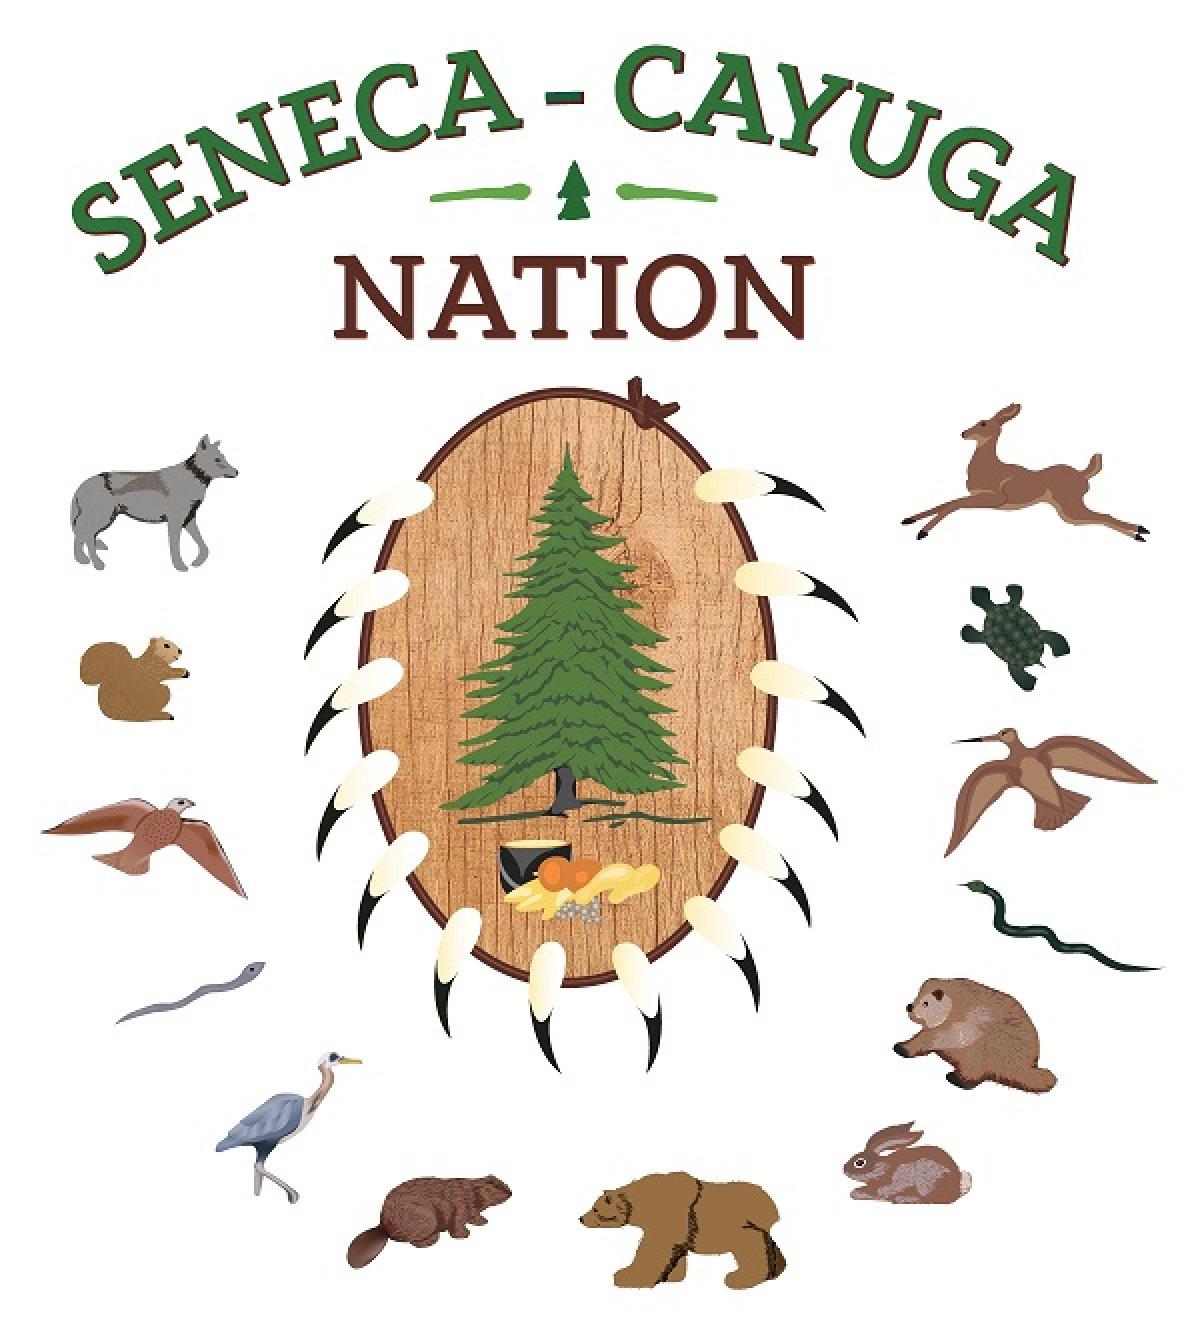 OK, Grove, Headstone Symbols and Meanings, Seneca-Cayuga Nation